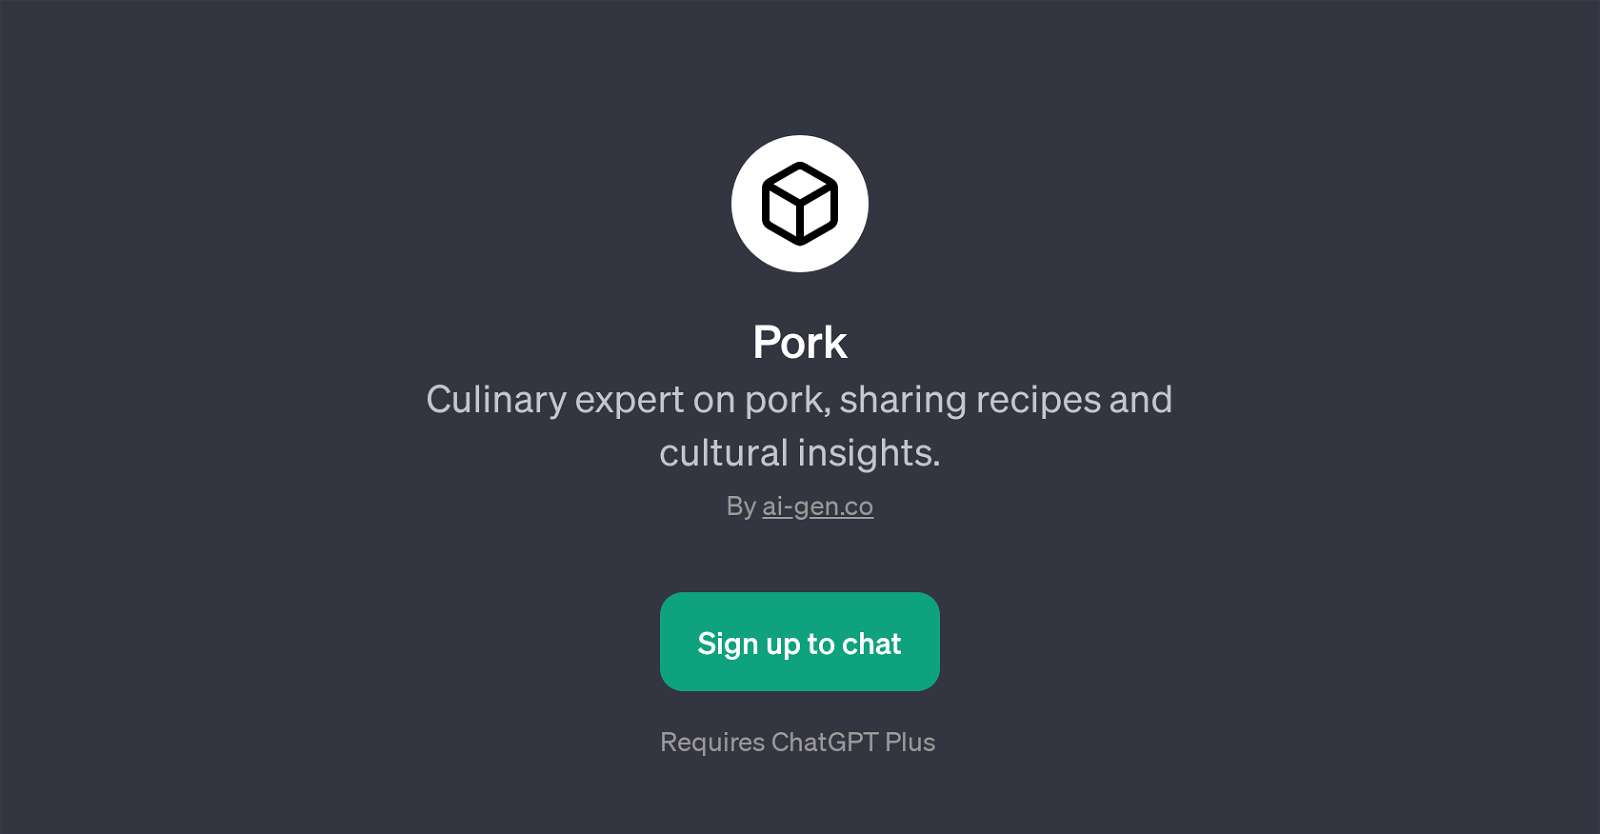 PorkPage website